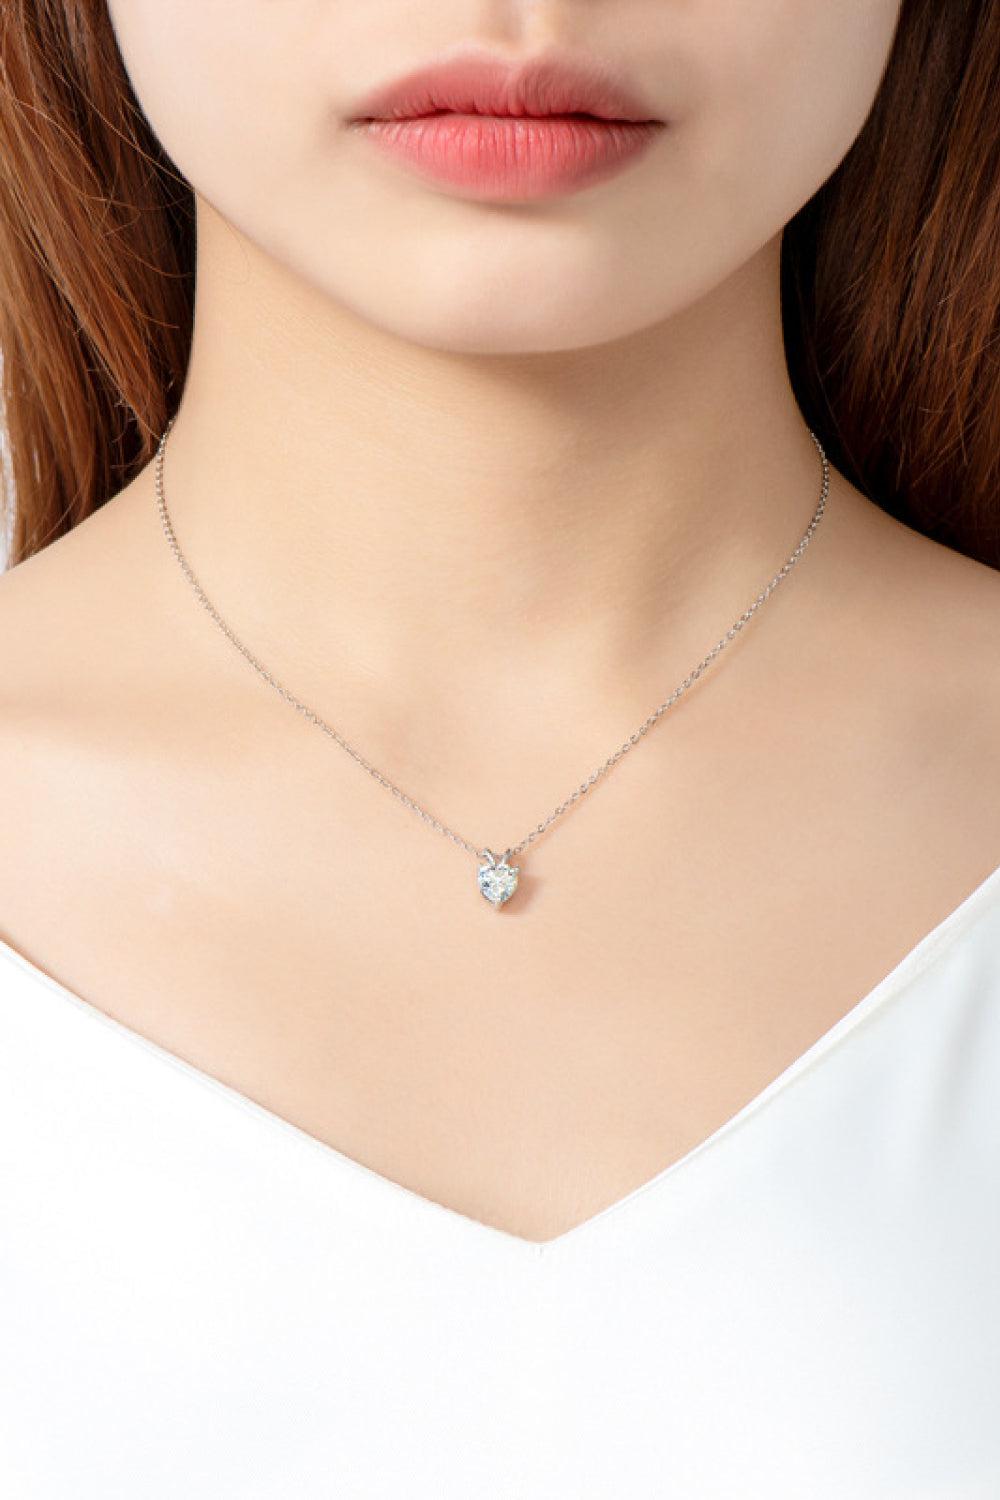 1 Carat Moissanite Heart-Shaped Pendant Necklace BLUE ZONE PLANET